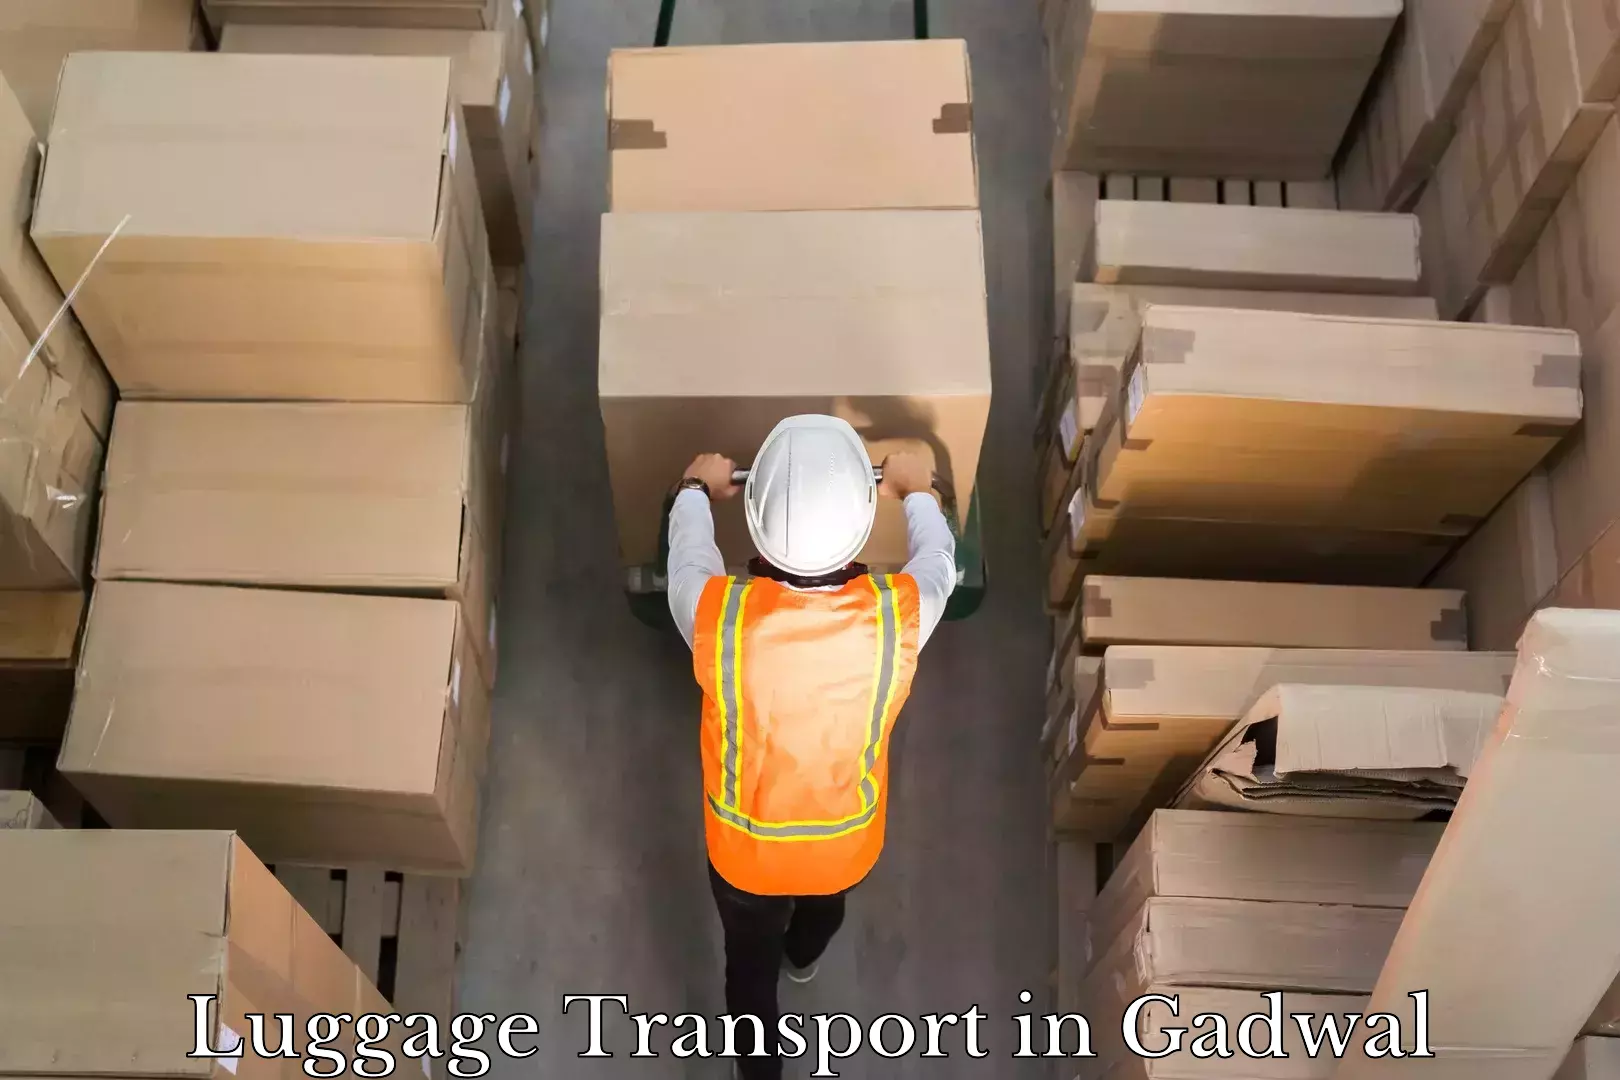 Luggage shipment processing in Gadwal